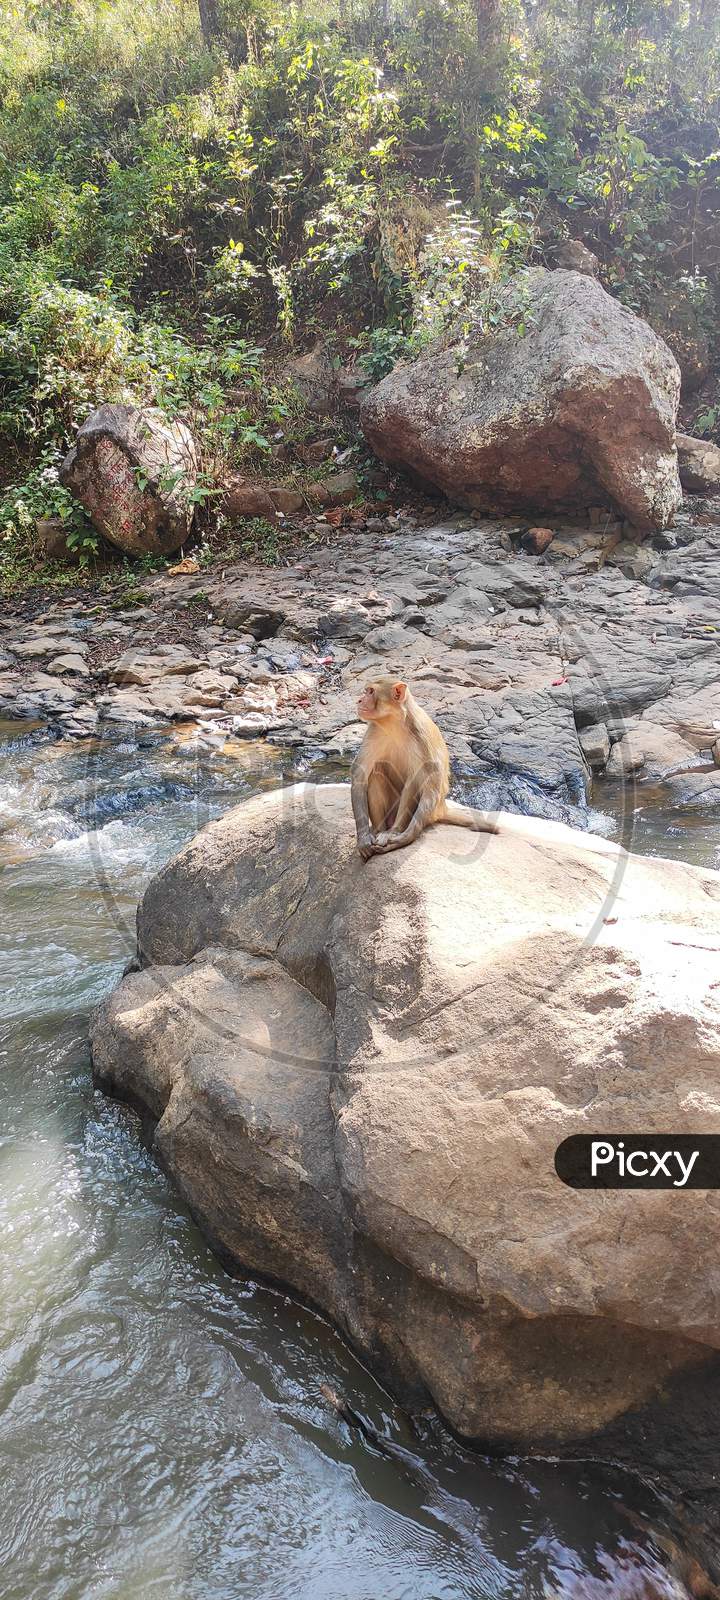 Monkey sitting on the rock.